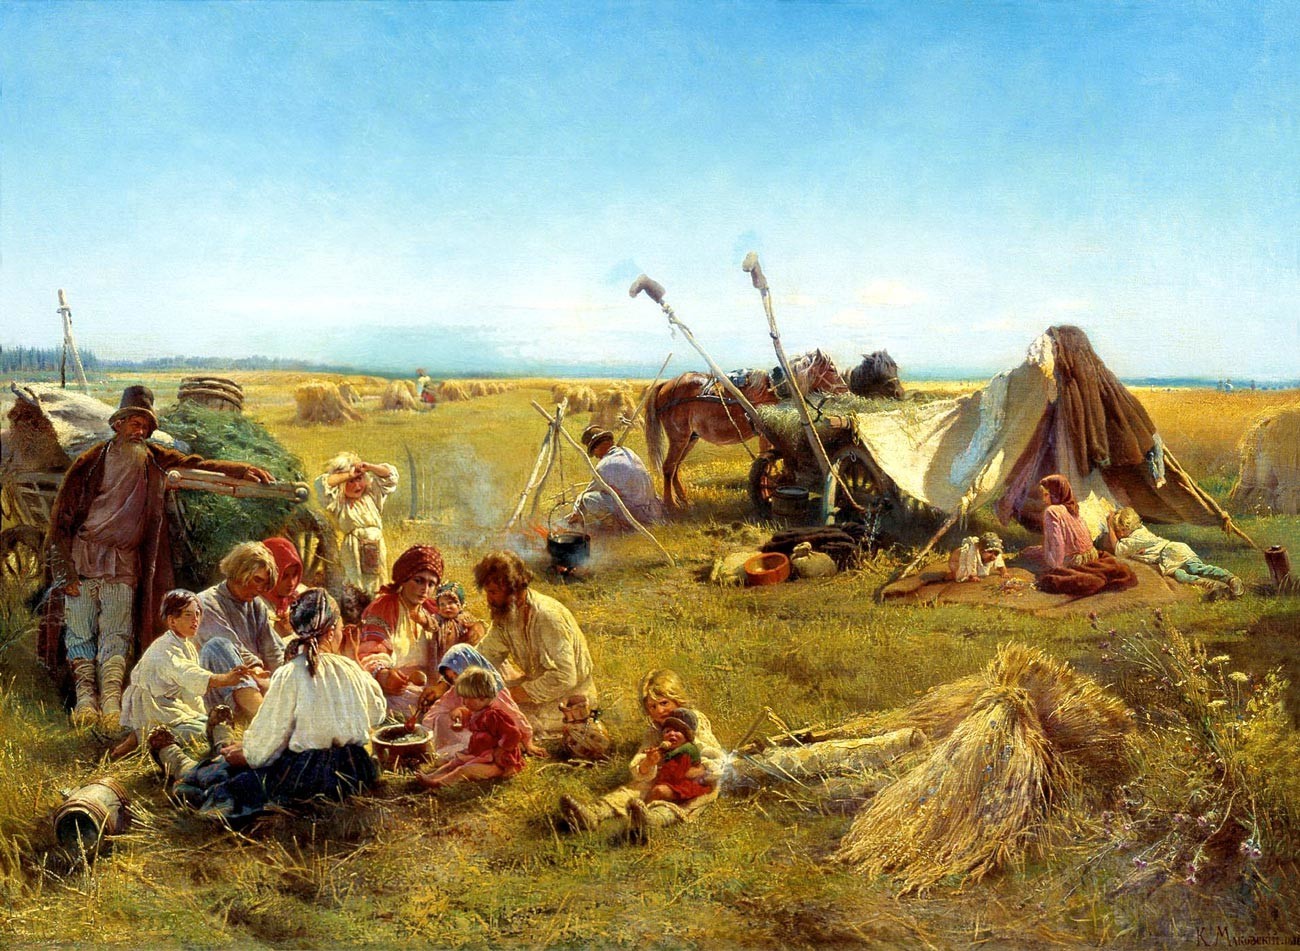 Kmečko kosilo na polju, Konstantin Makovski, 1871